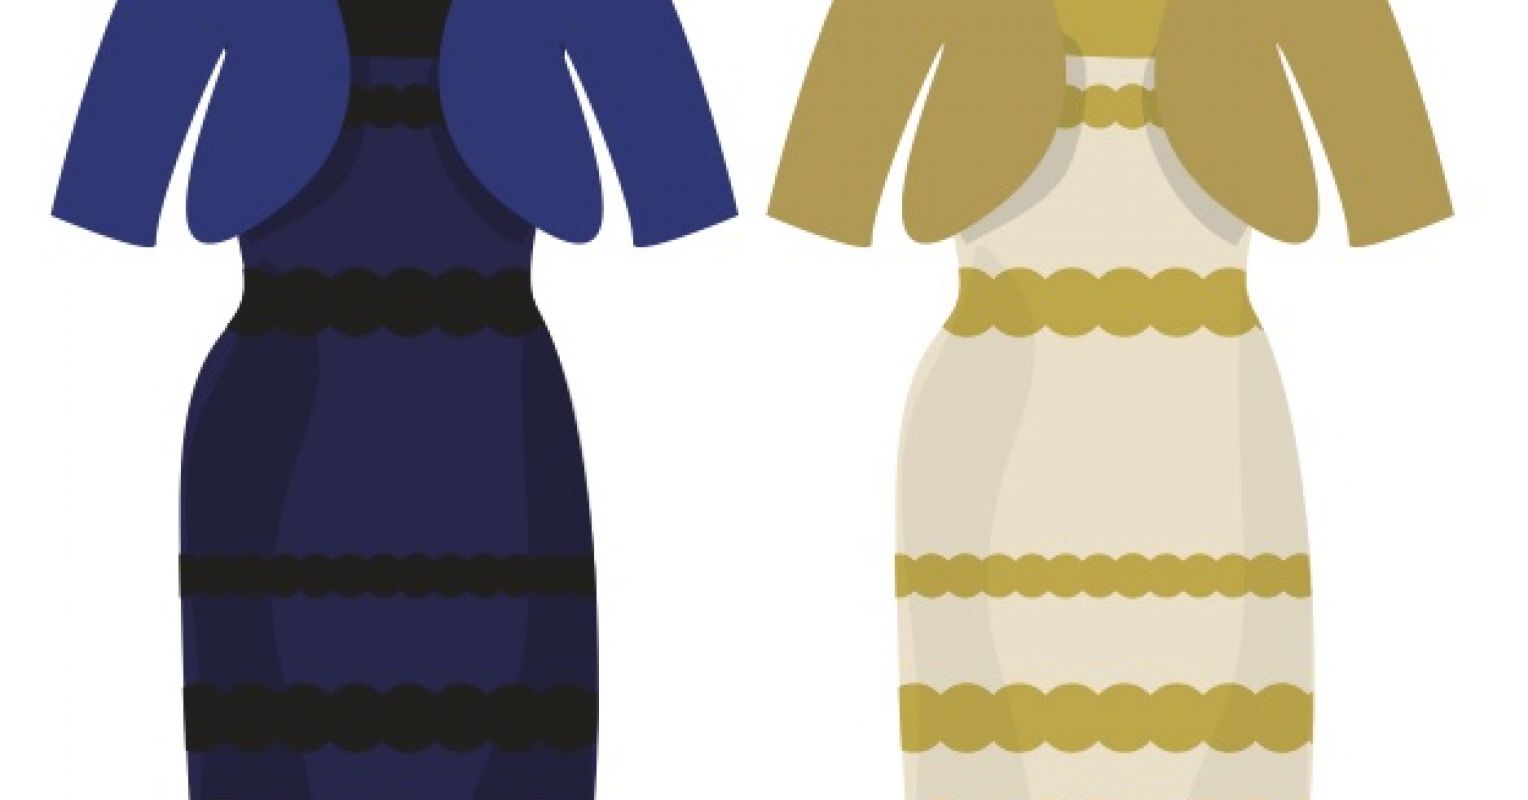 Blue/Black White/Gold Dress Controversy ...